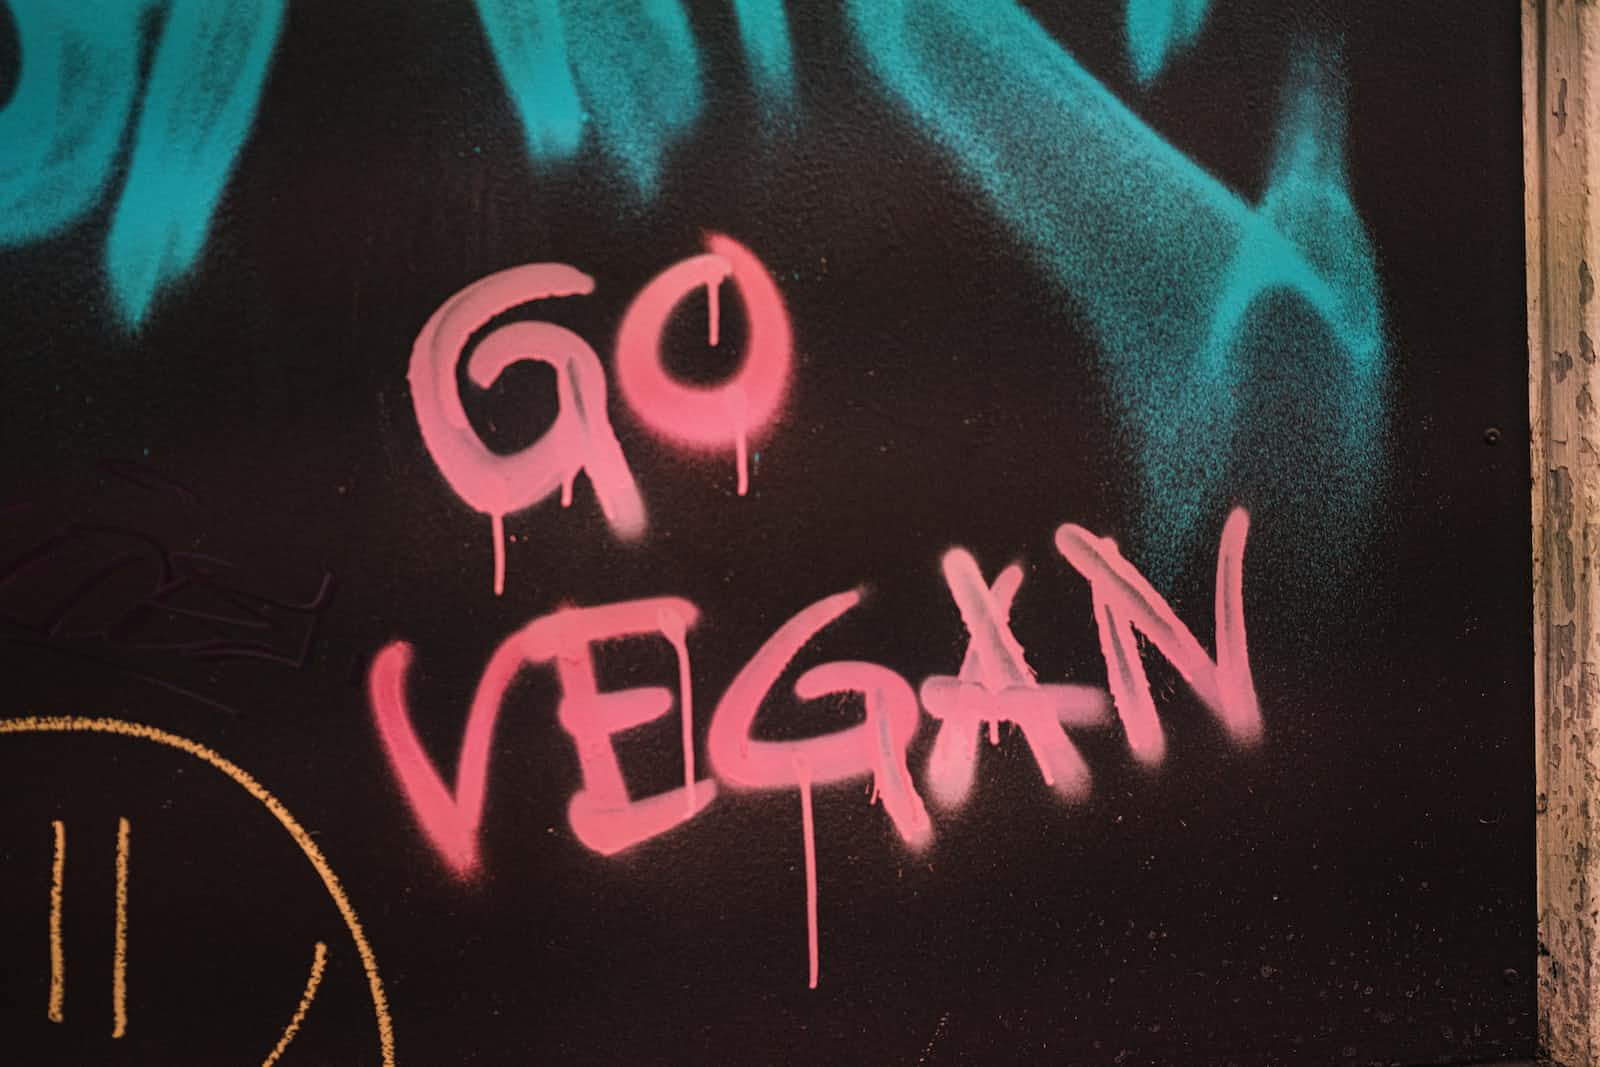 Go Vegan in graffiti font